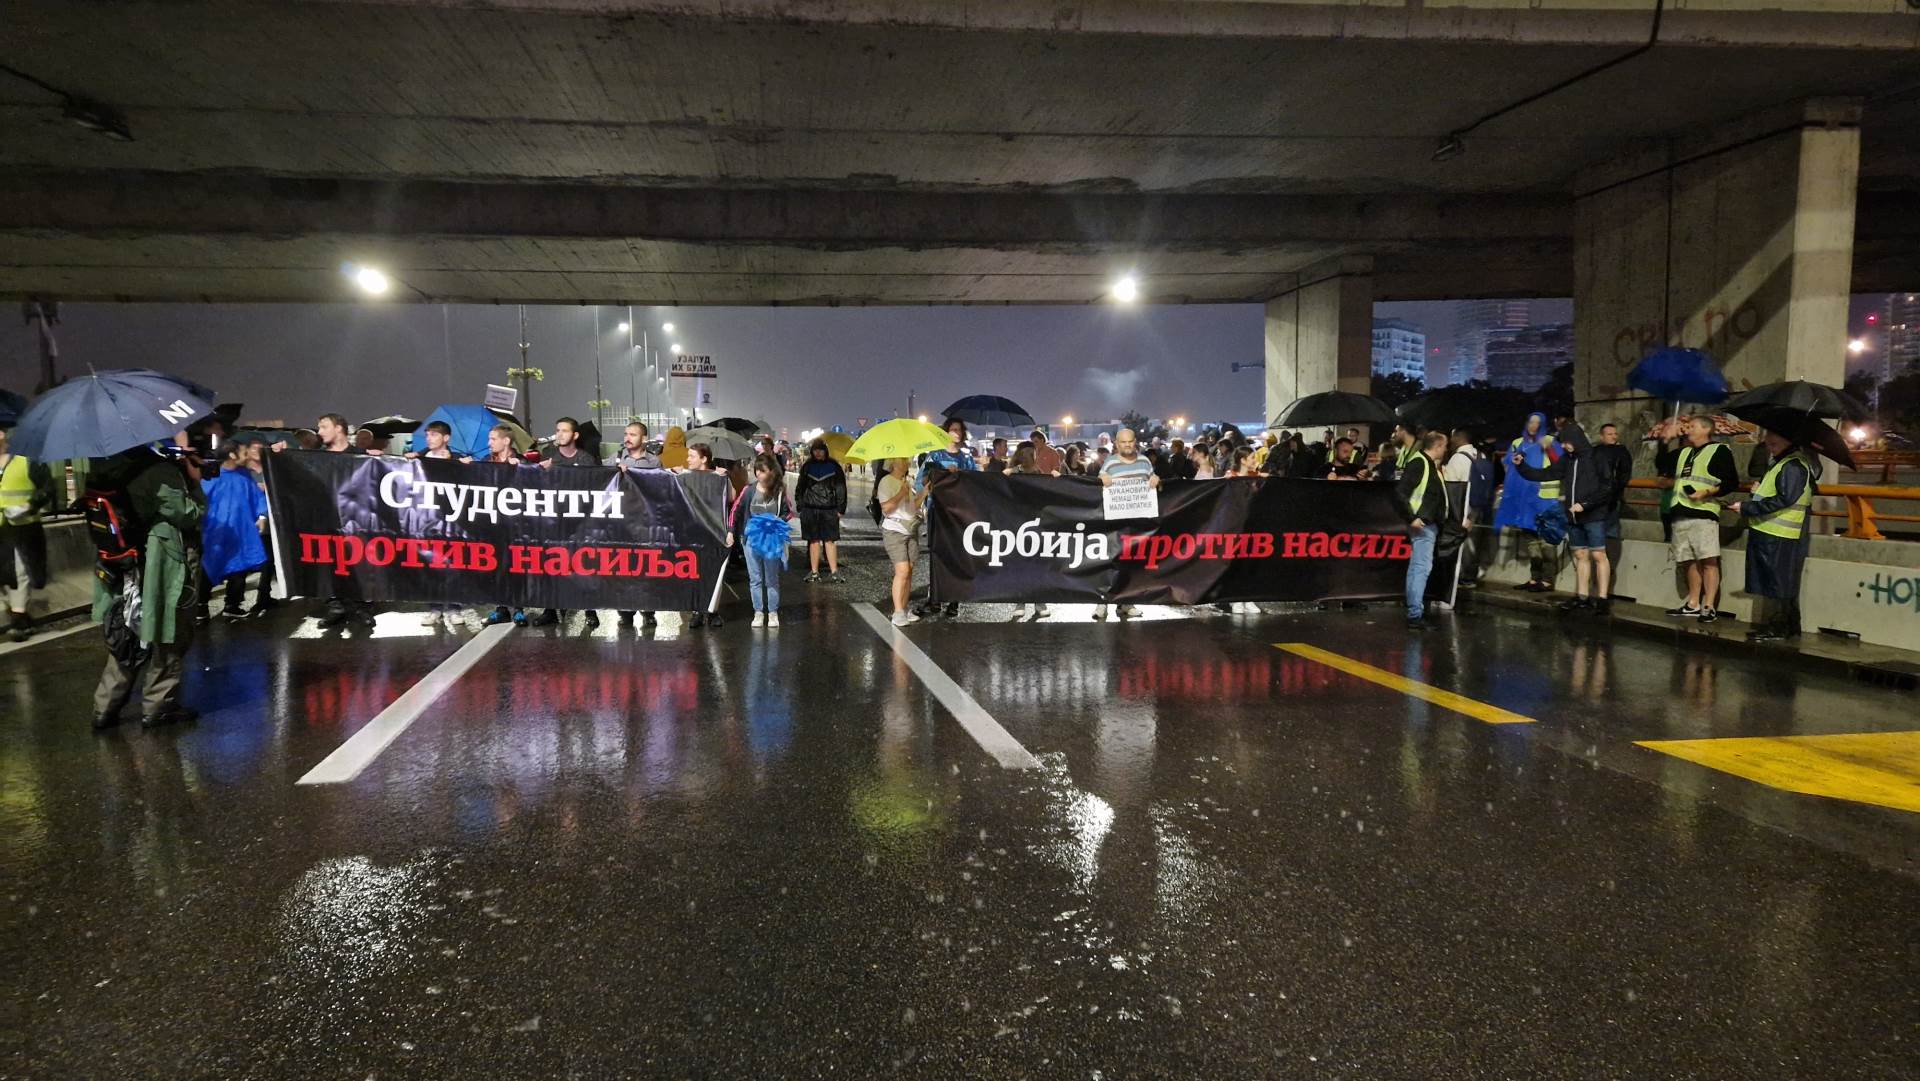  14. protest "Srbija protiv nasilja" 